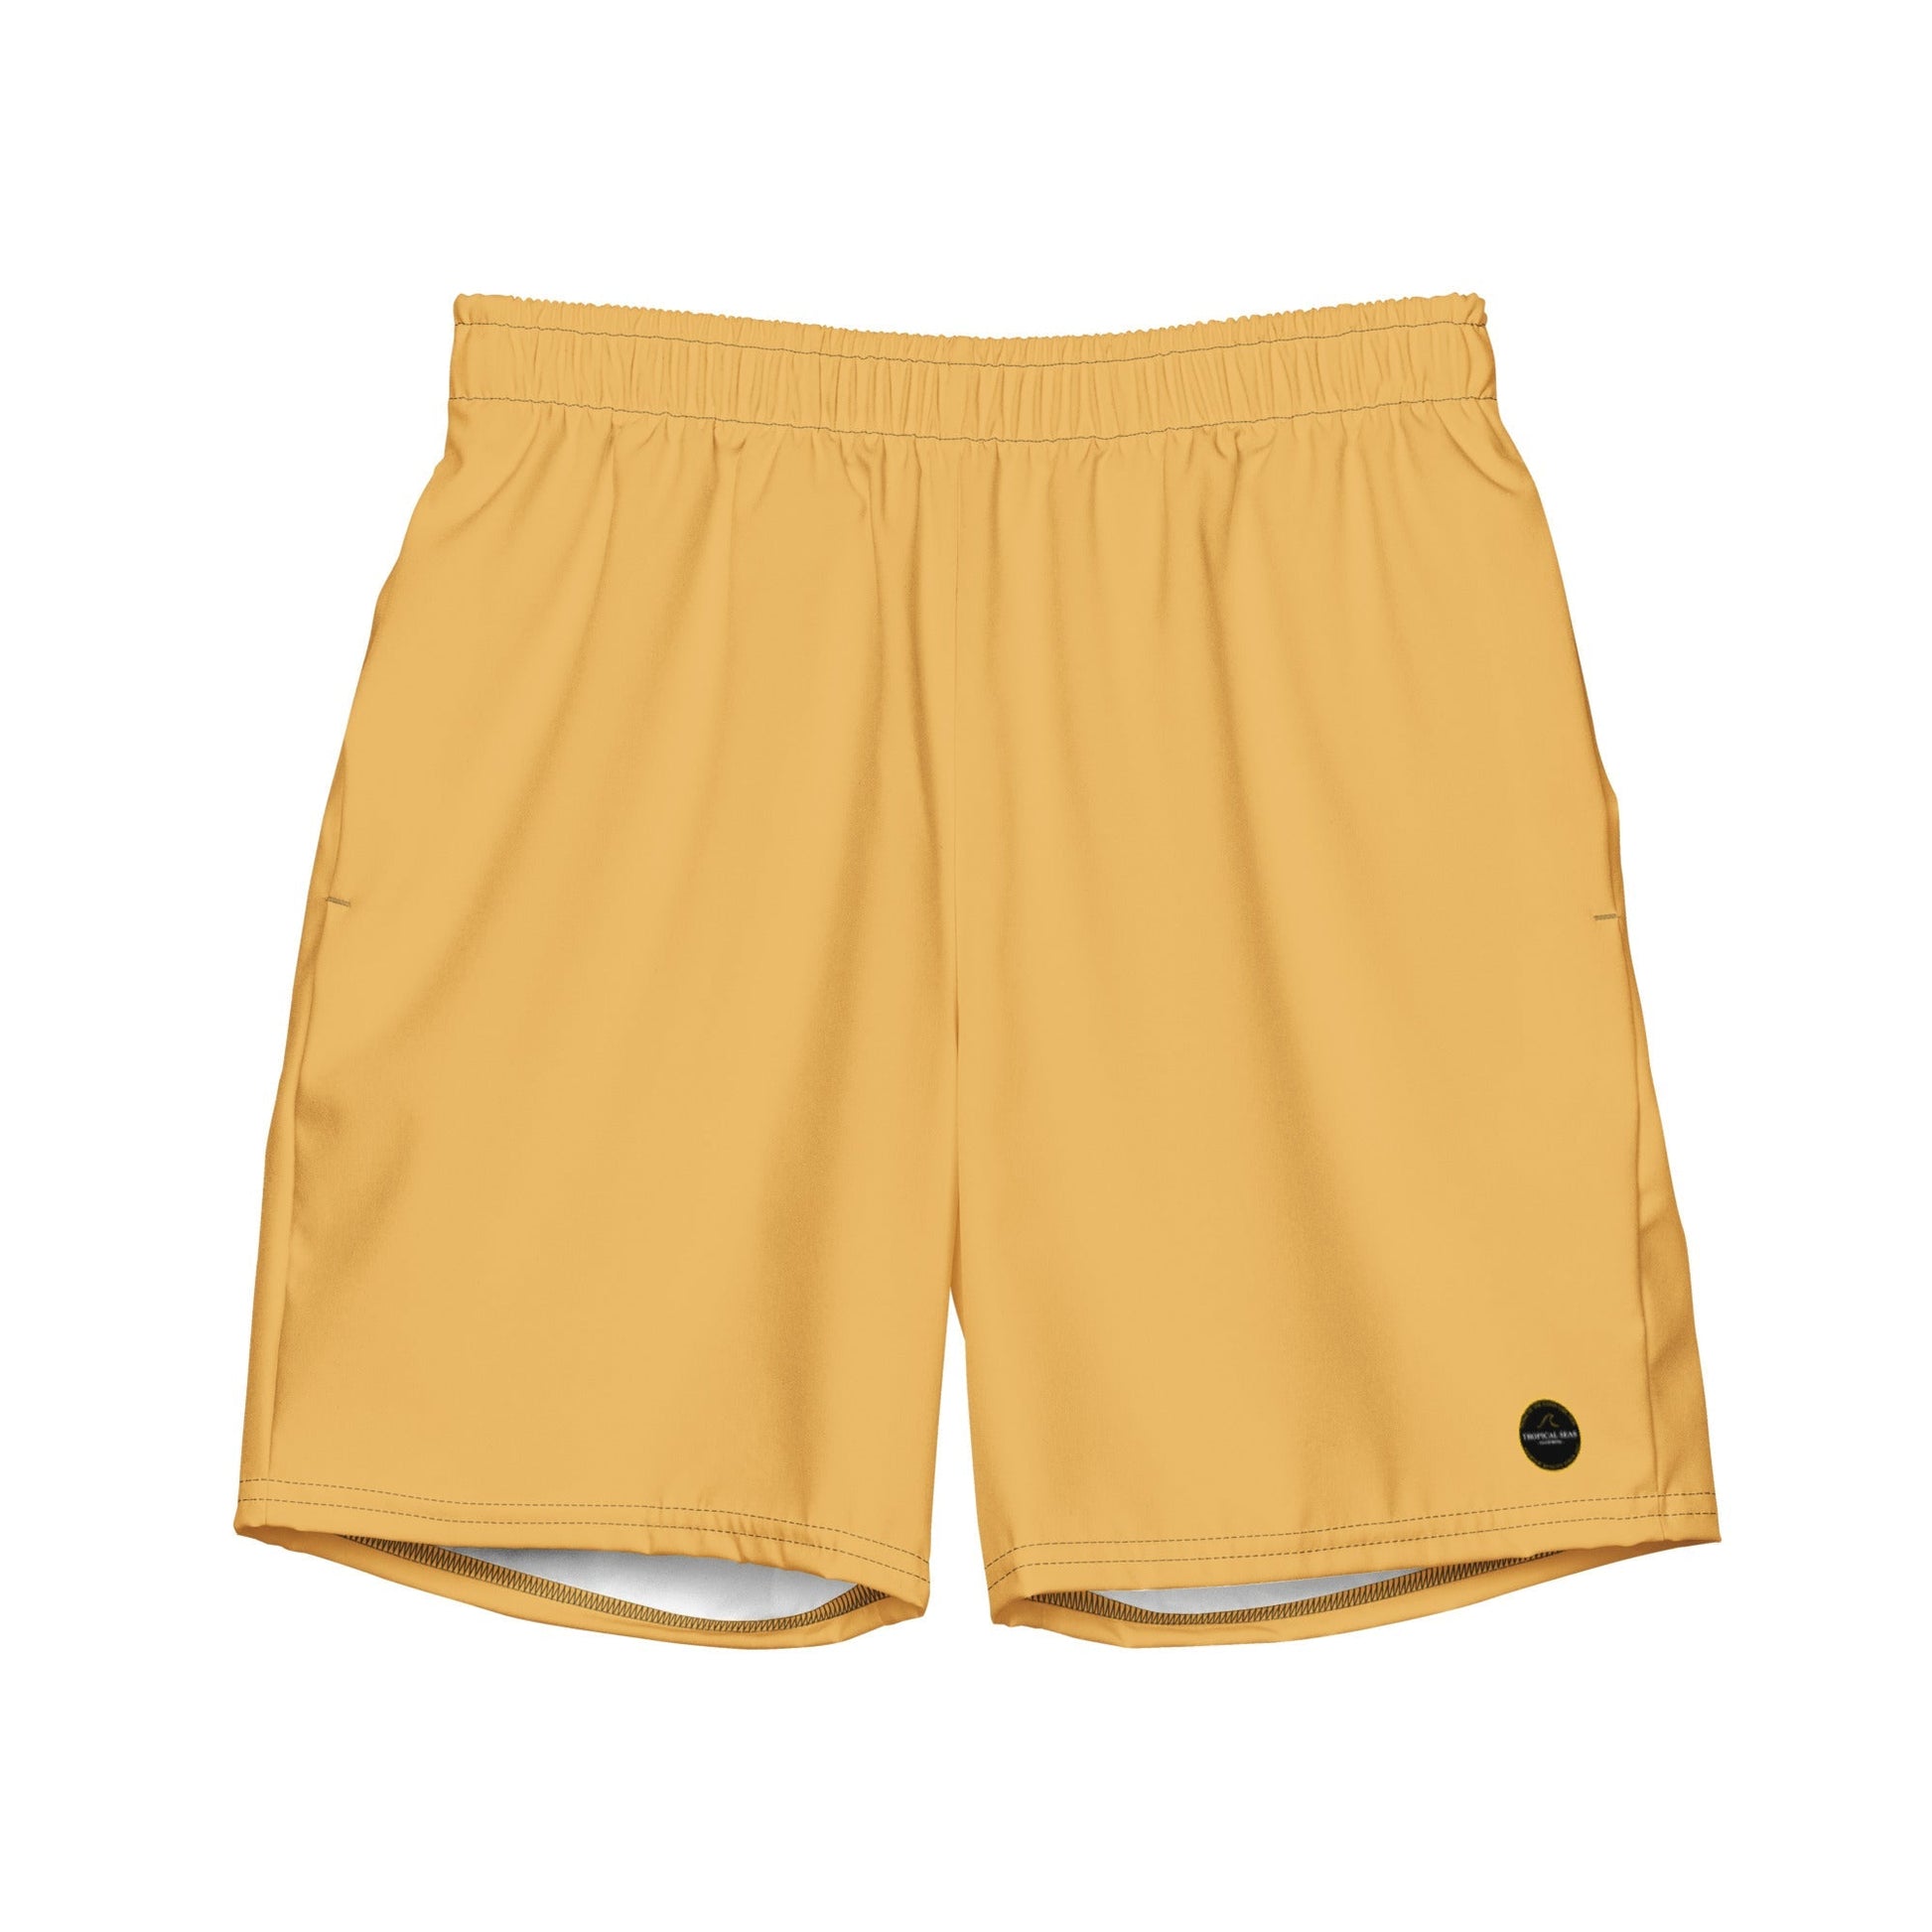 Men's Gold Eco Board Shorts - Tropical Seas Clothing 